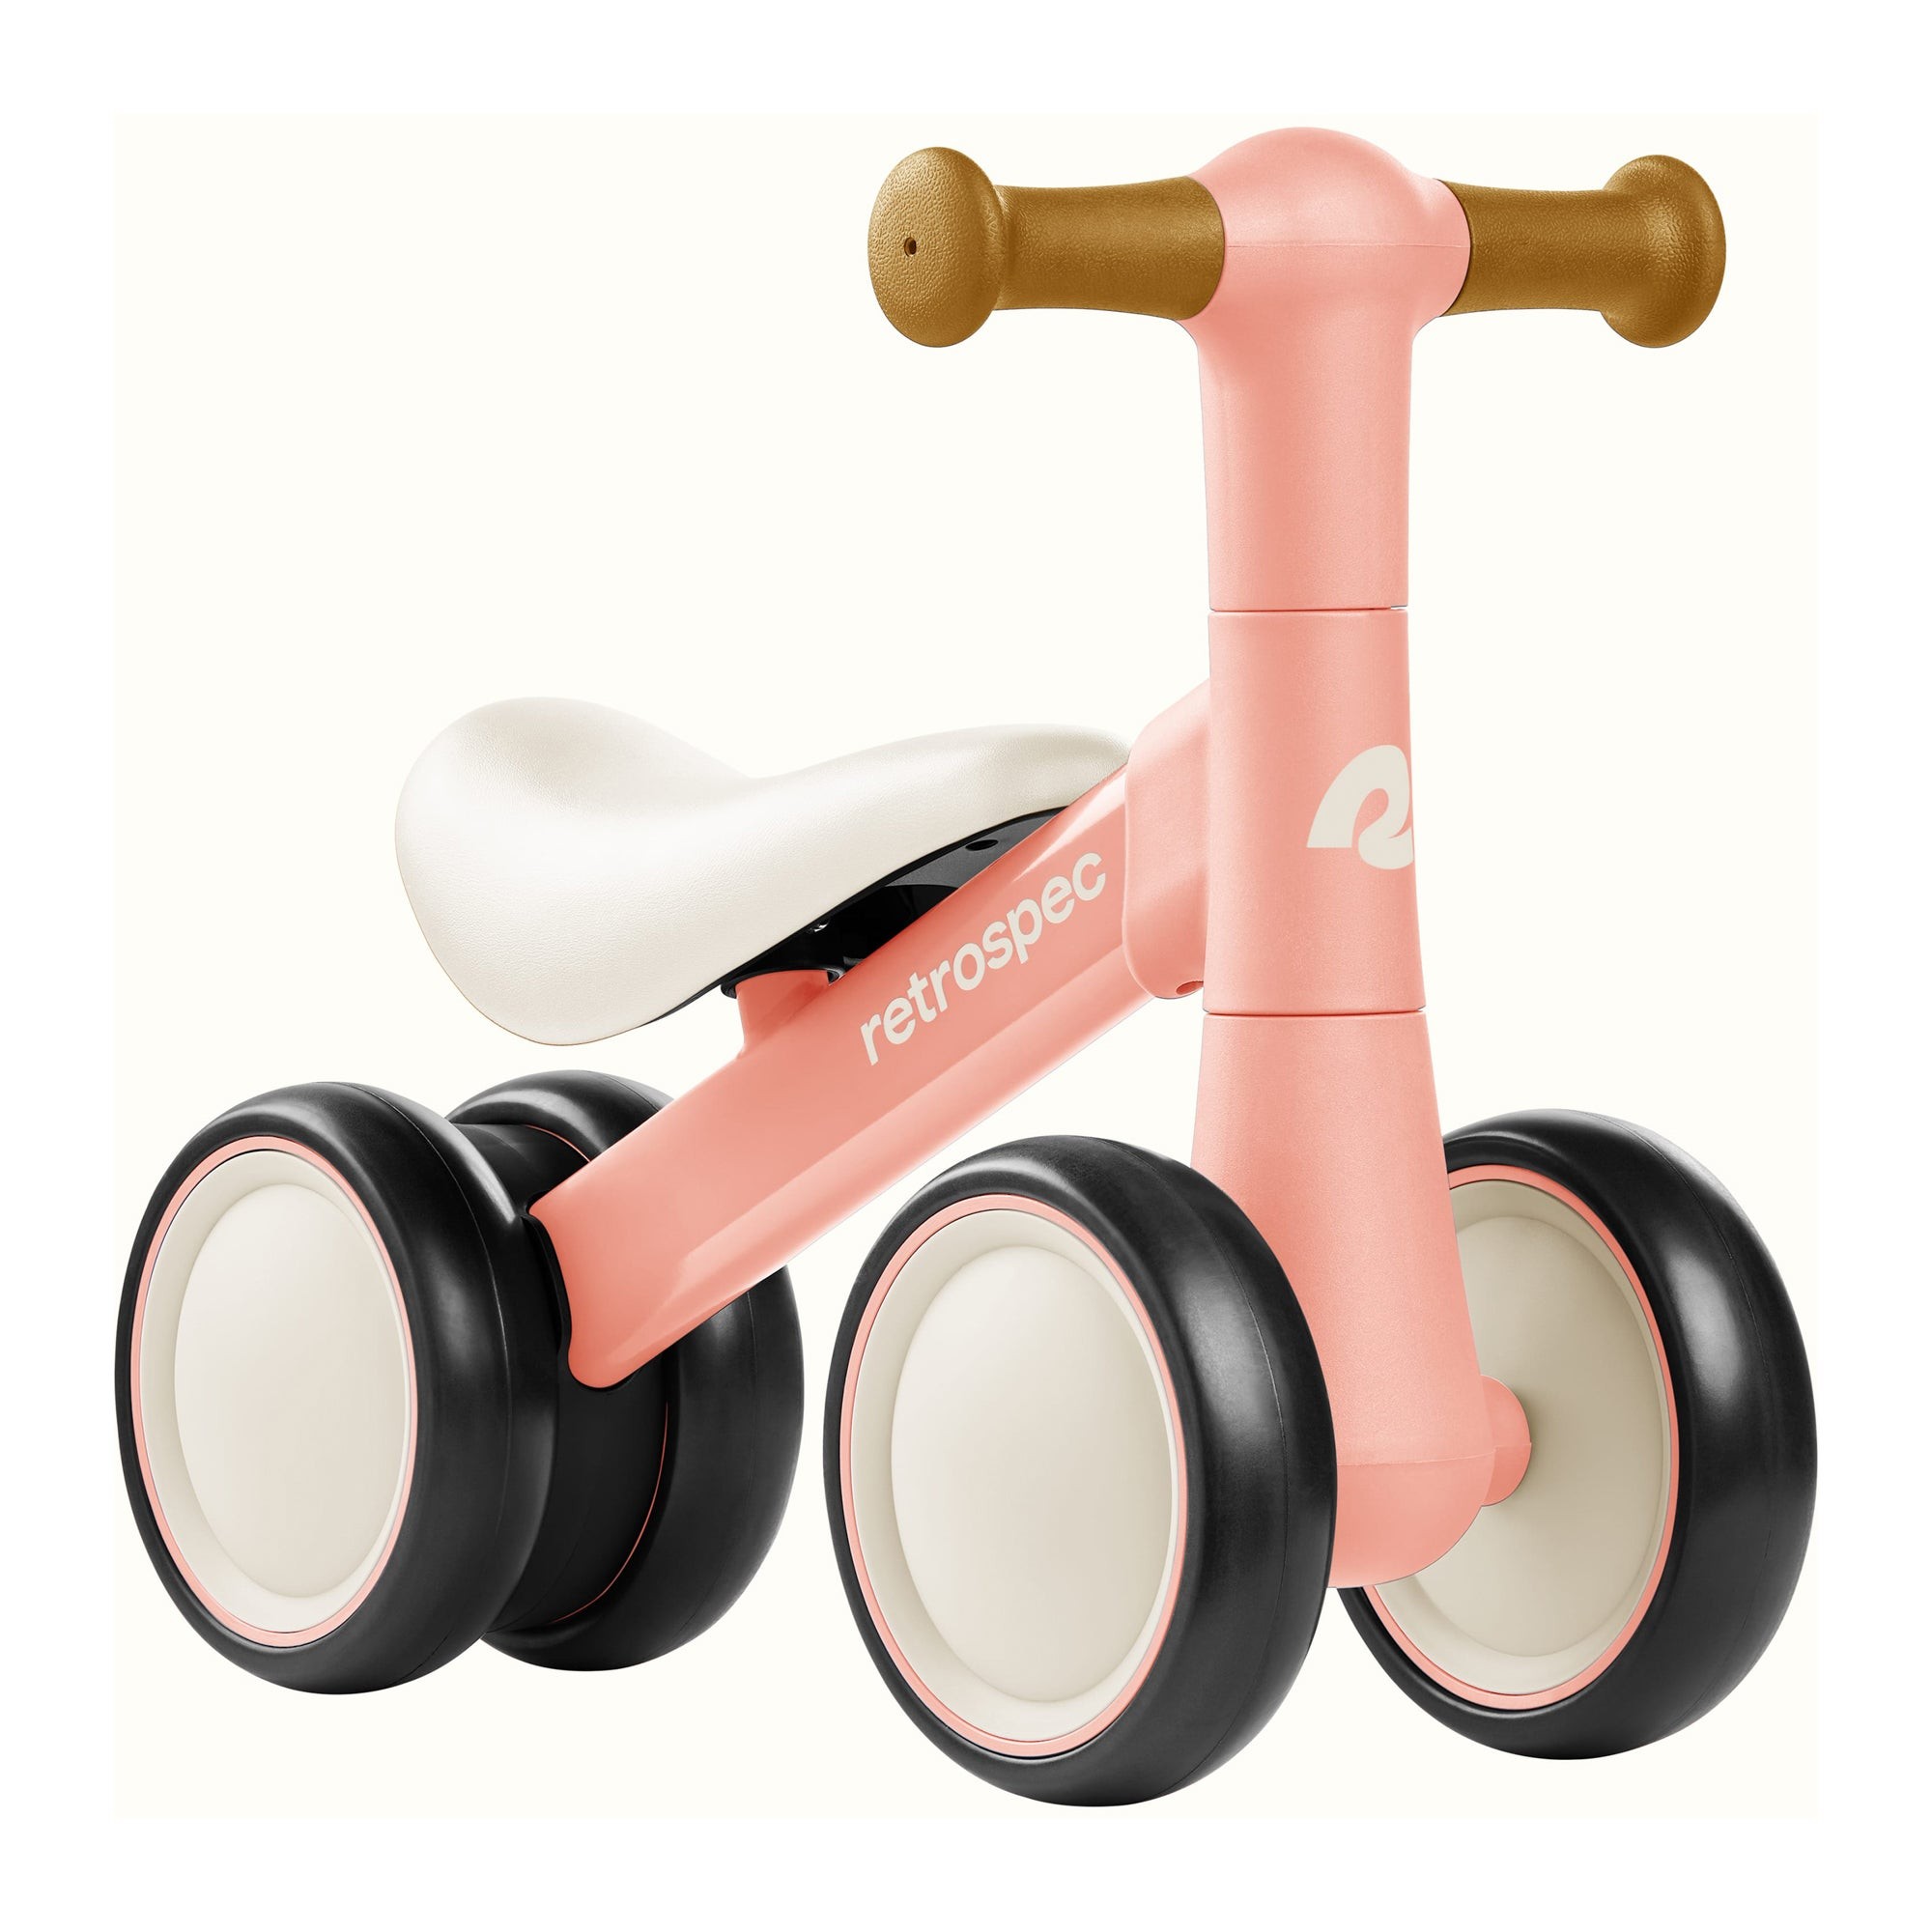 Cricket 2 Baby Walker Balance Bike - Ages 12-24 Months Baby Pink